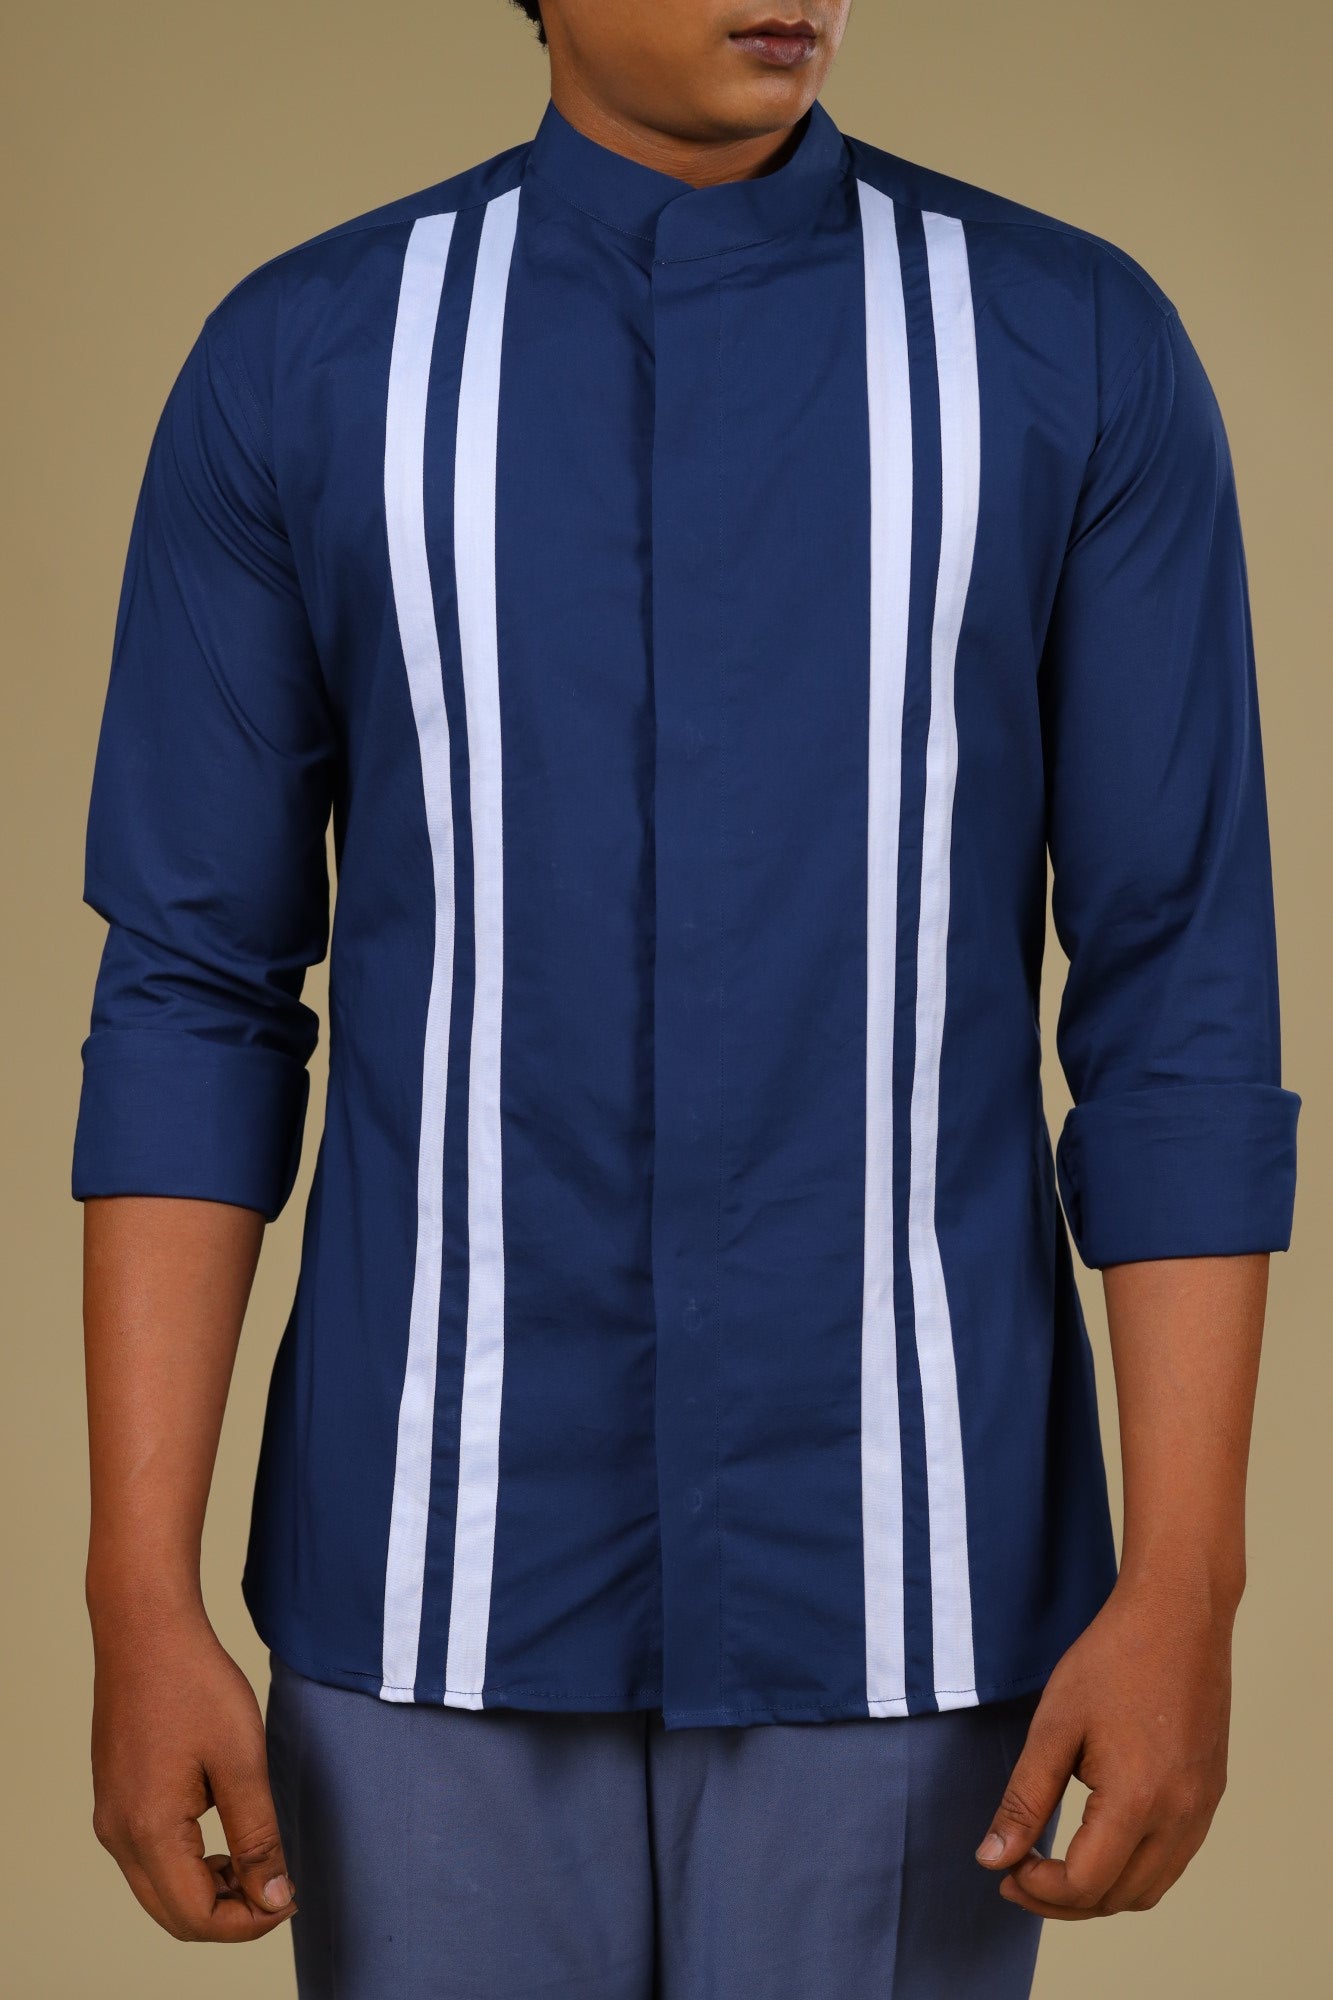 Men's Light Blue Color Blue Turk Shirt Full Sleeves Casual Shirt - Hilo Design